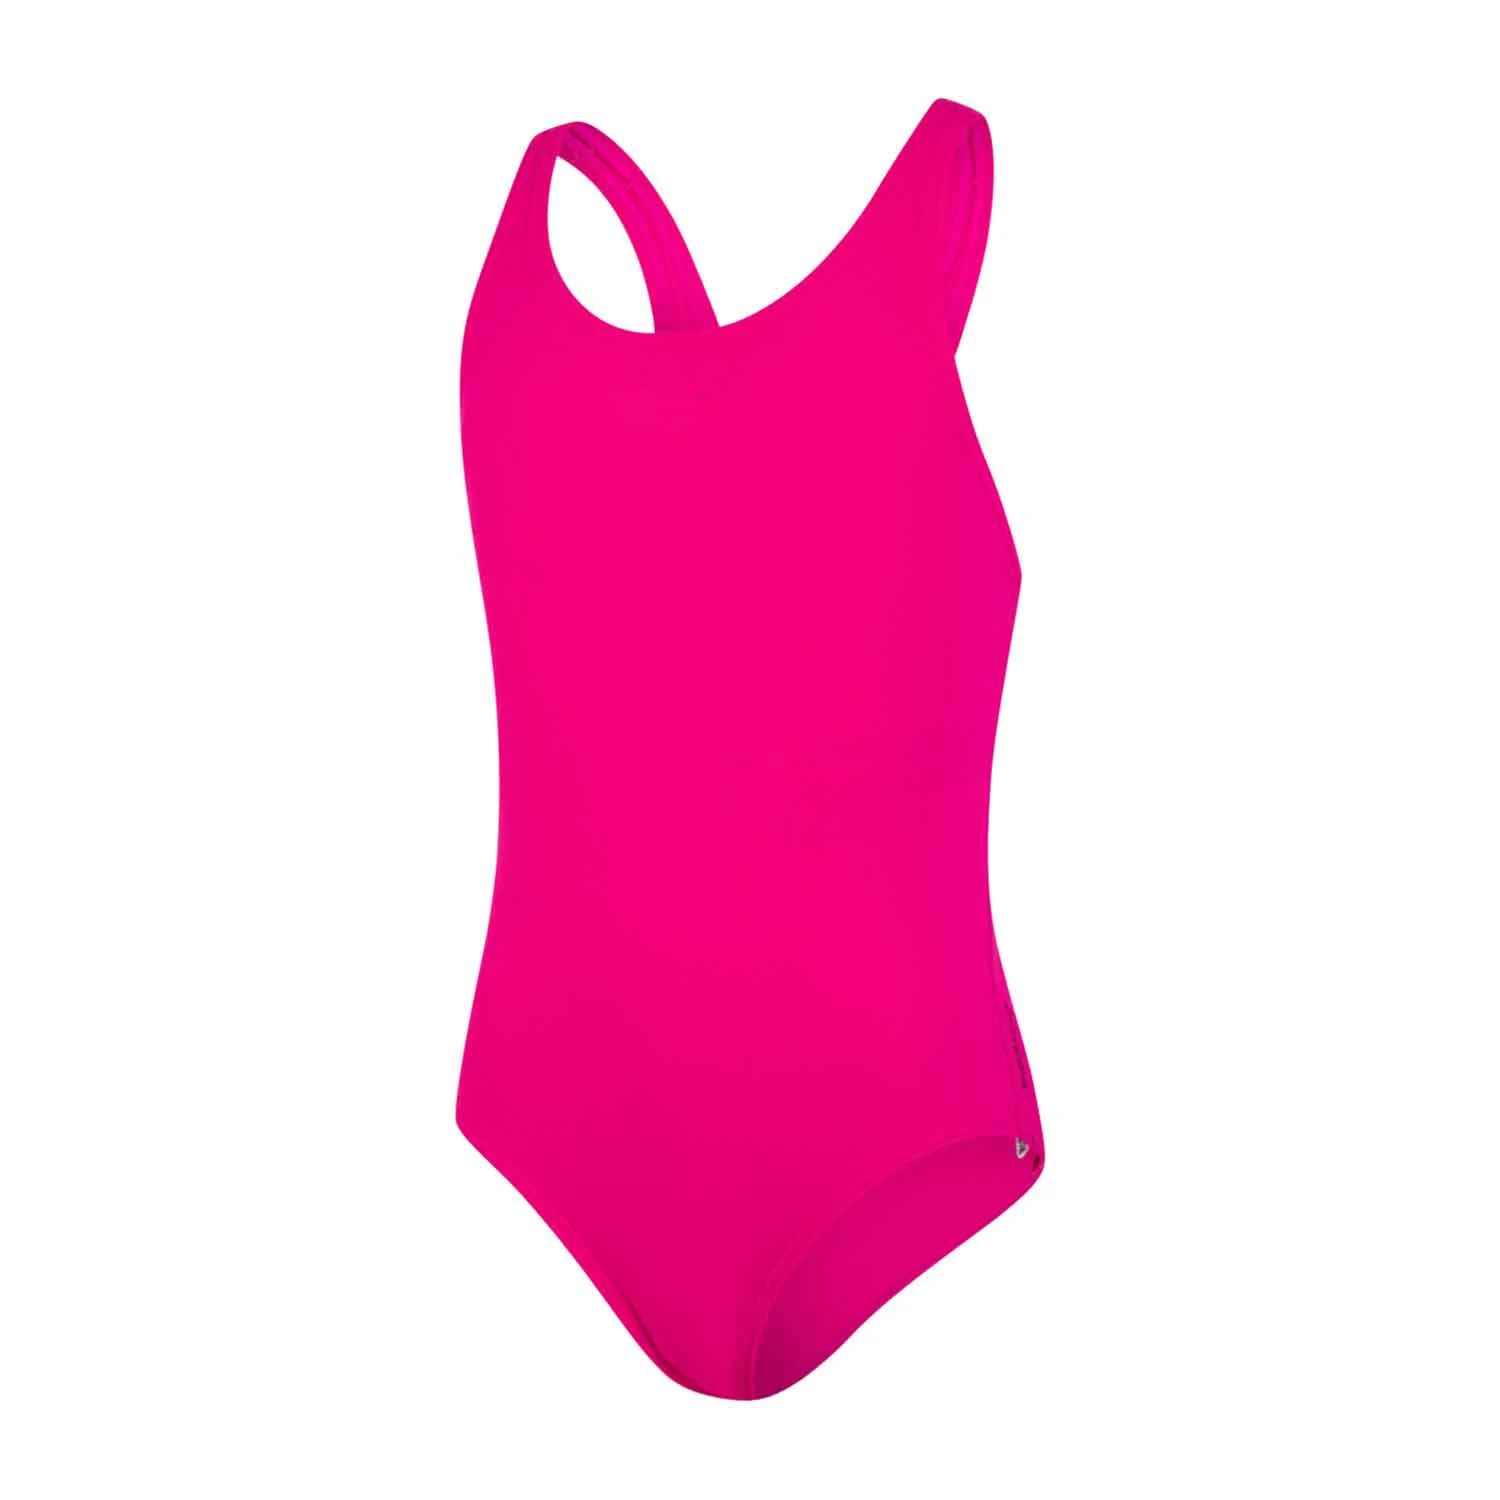 Girls Swimsuit - Buy Girls Swimsuit Product on Alibaba.com